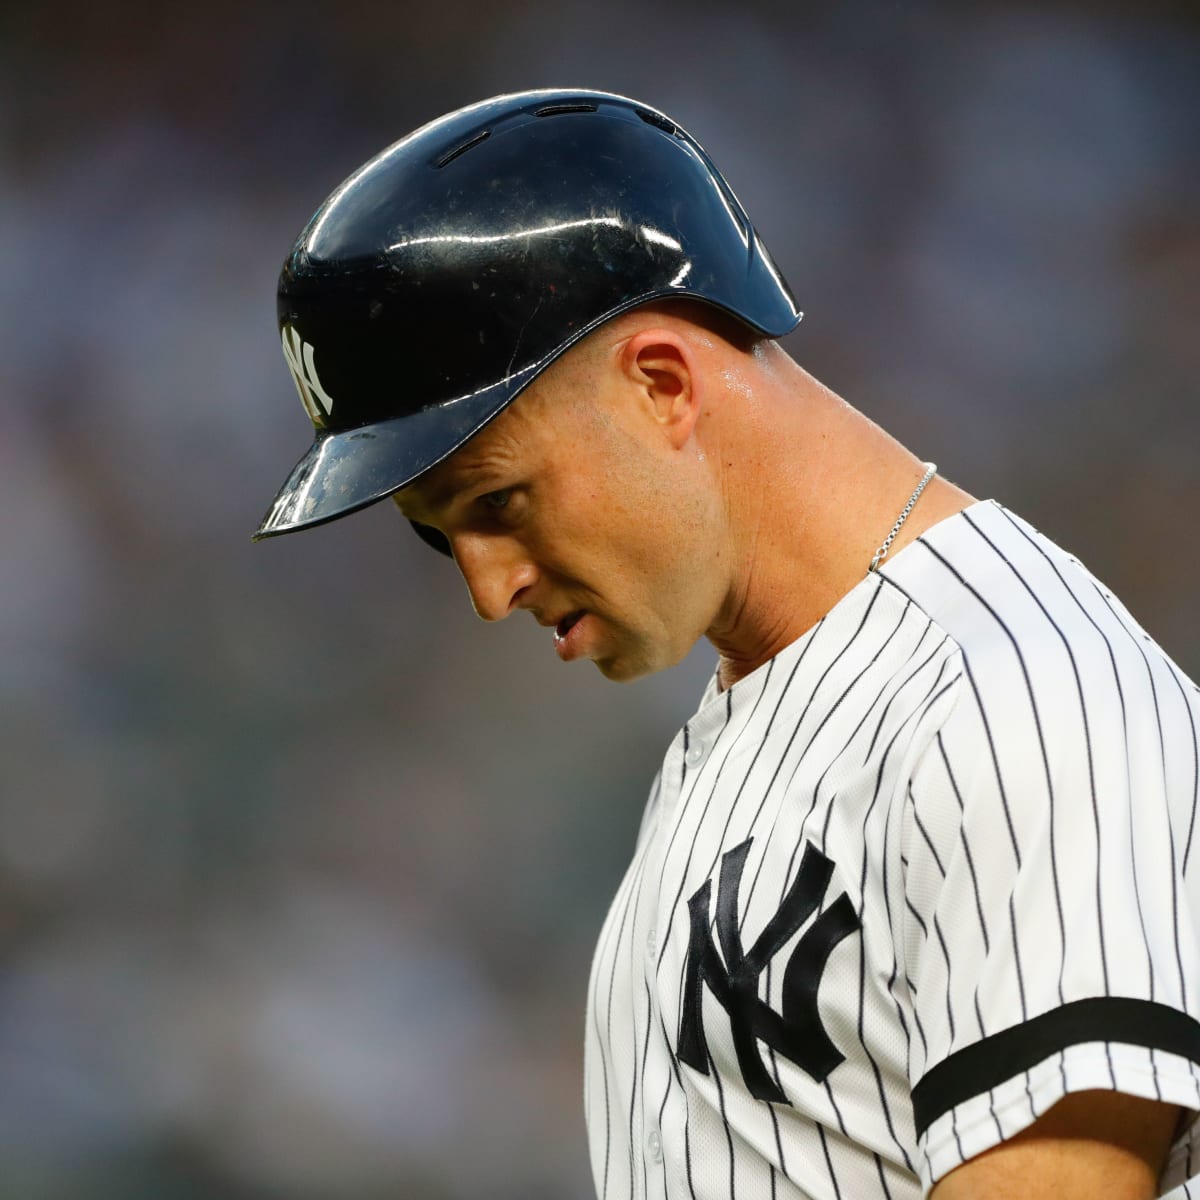 Yankees: Should Brett Gardner Have His Number Retired? - Unhinged New York